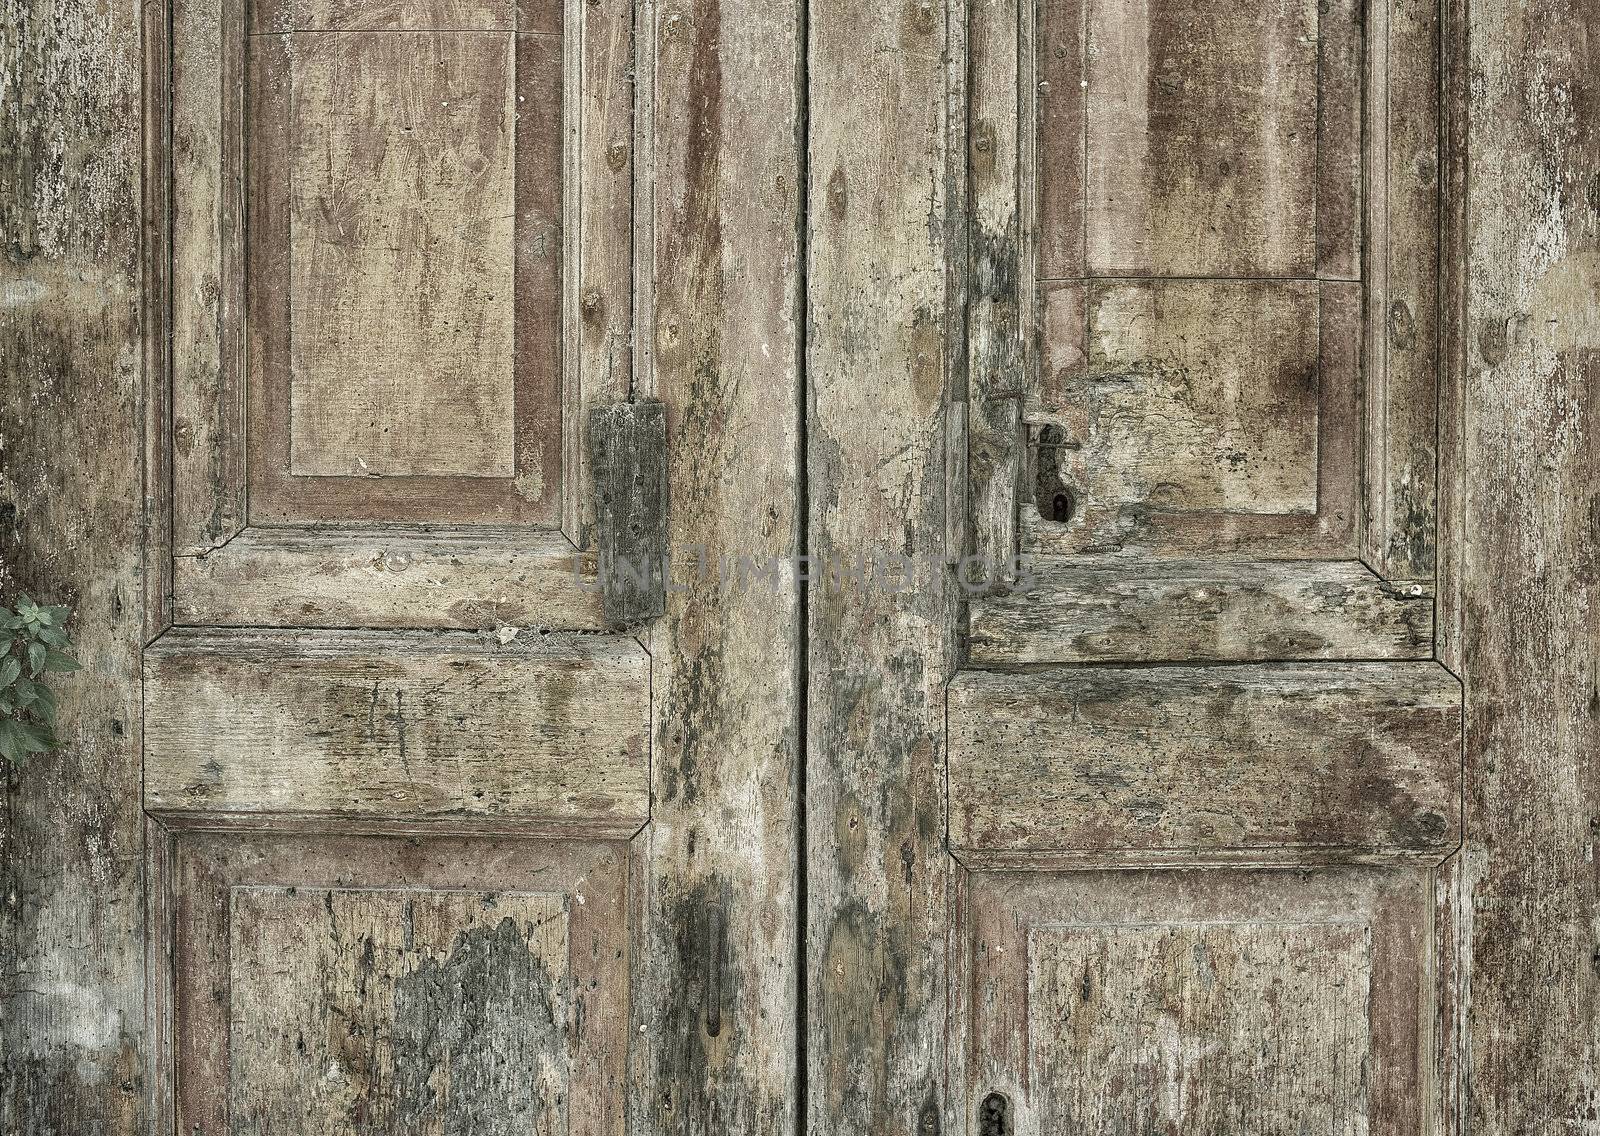 Very old wooden door in decay - Sassi - Basilicata, Italy.